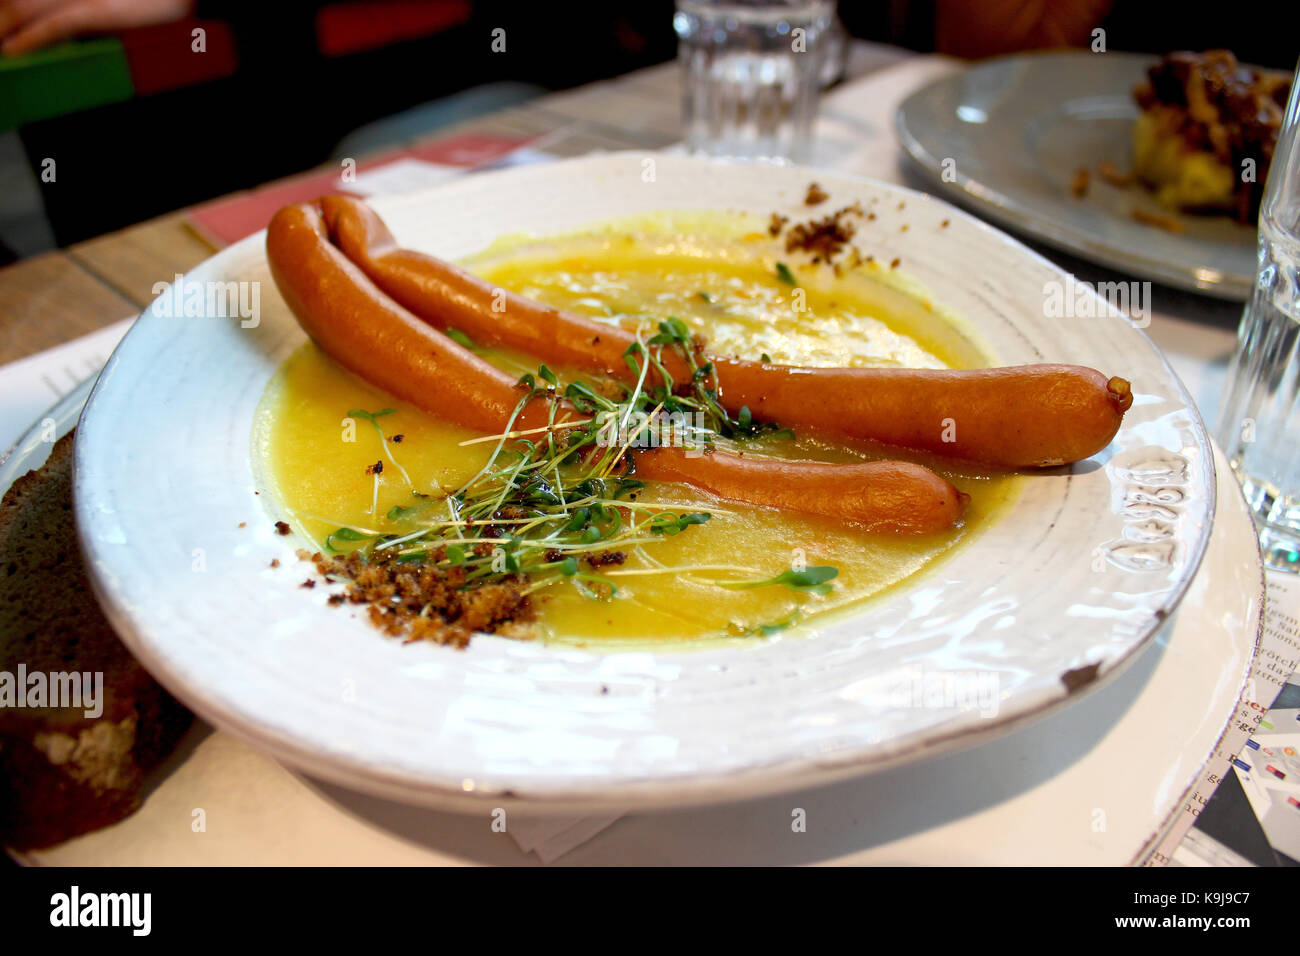 Frankfurter sausage with soup - Frankfurt restaurant, Germany Stock Photo